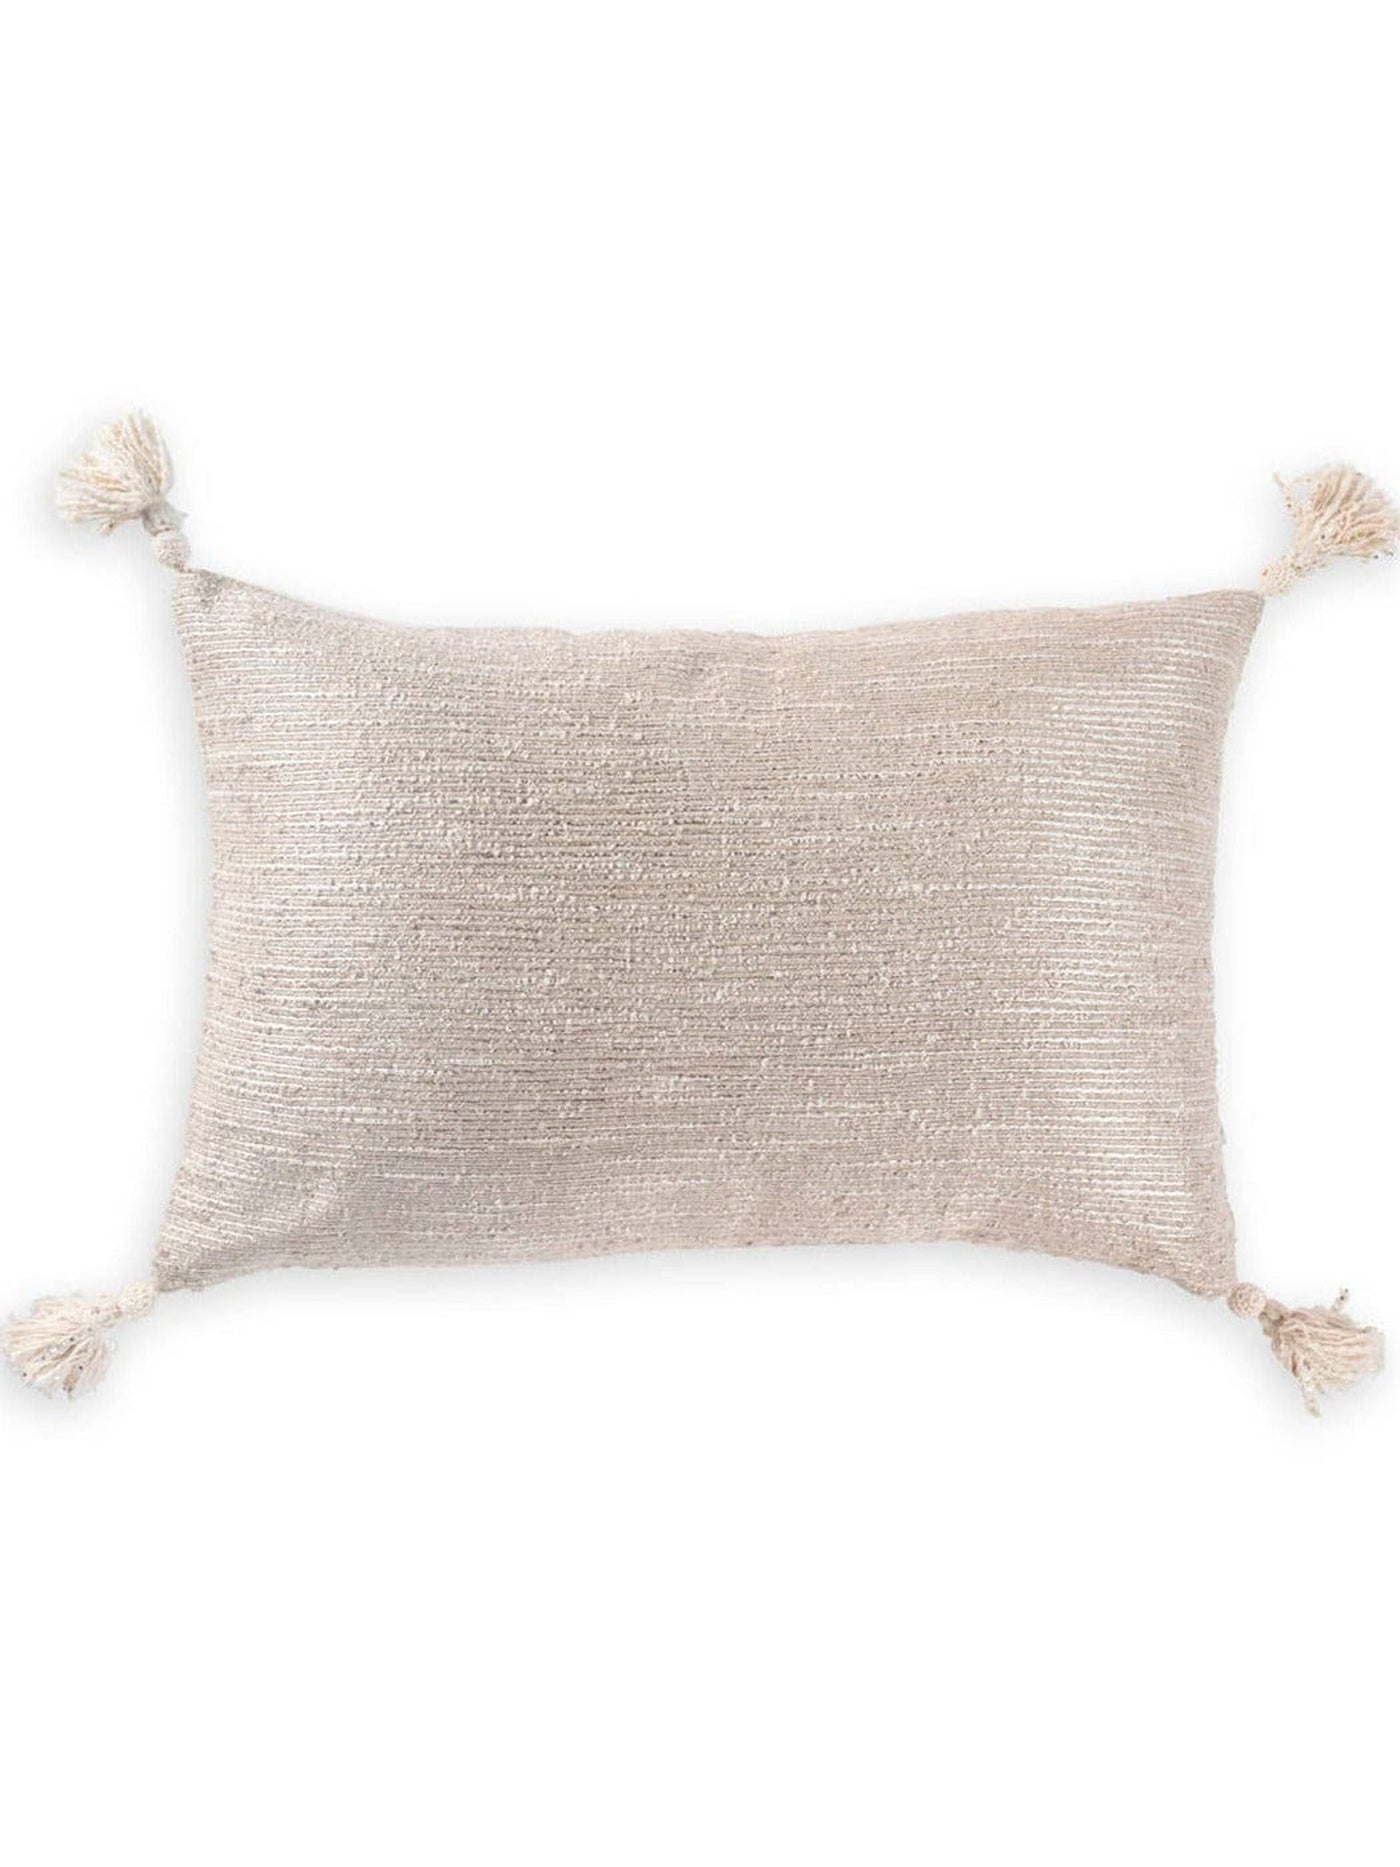 Cushion Cover - Handwoven Metallic Daisy